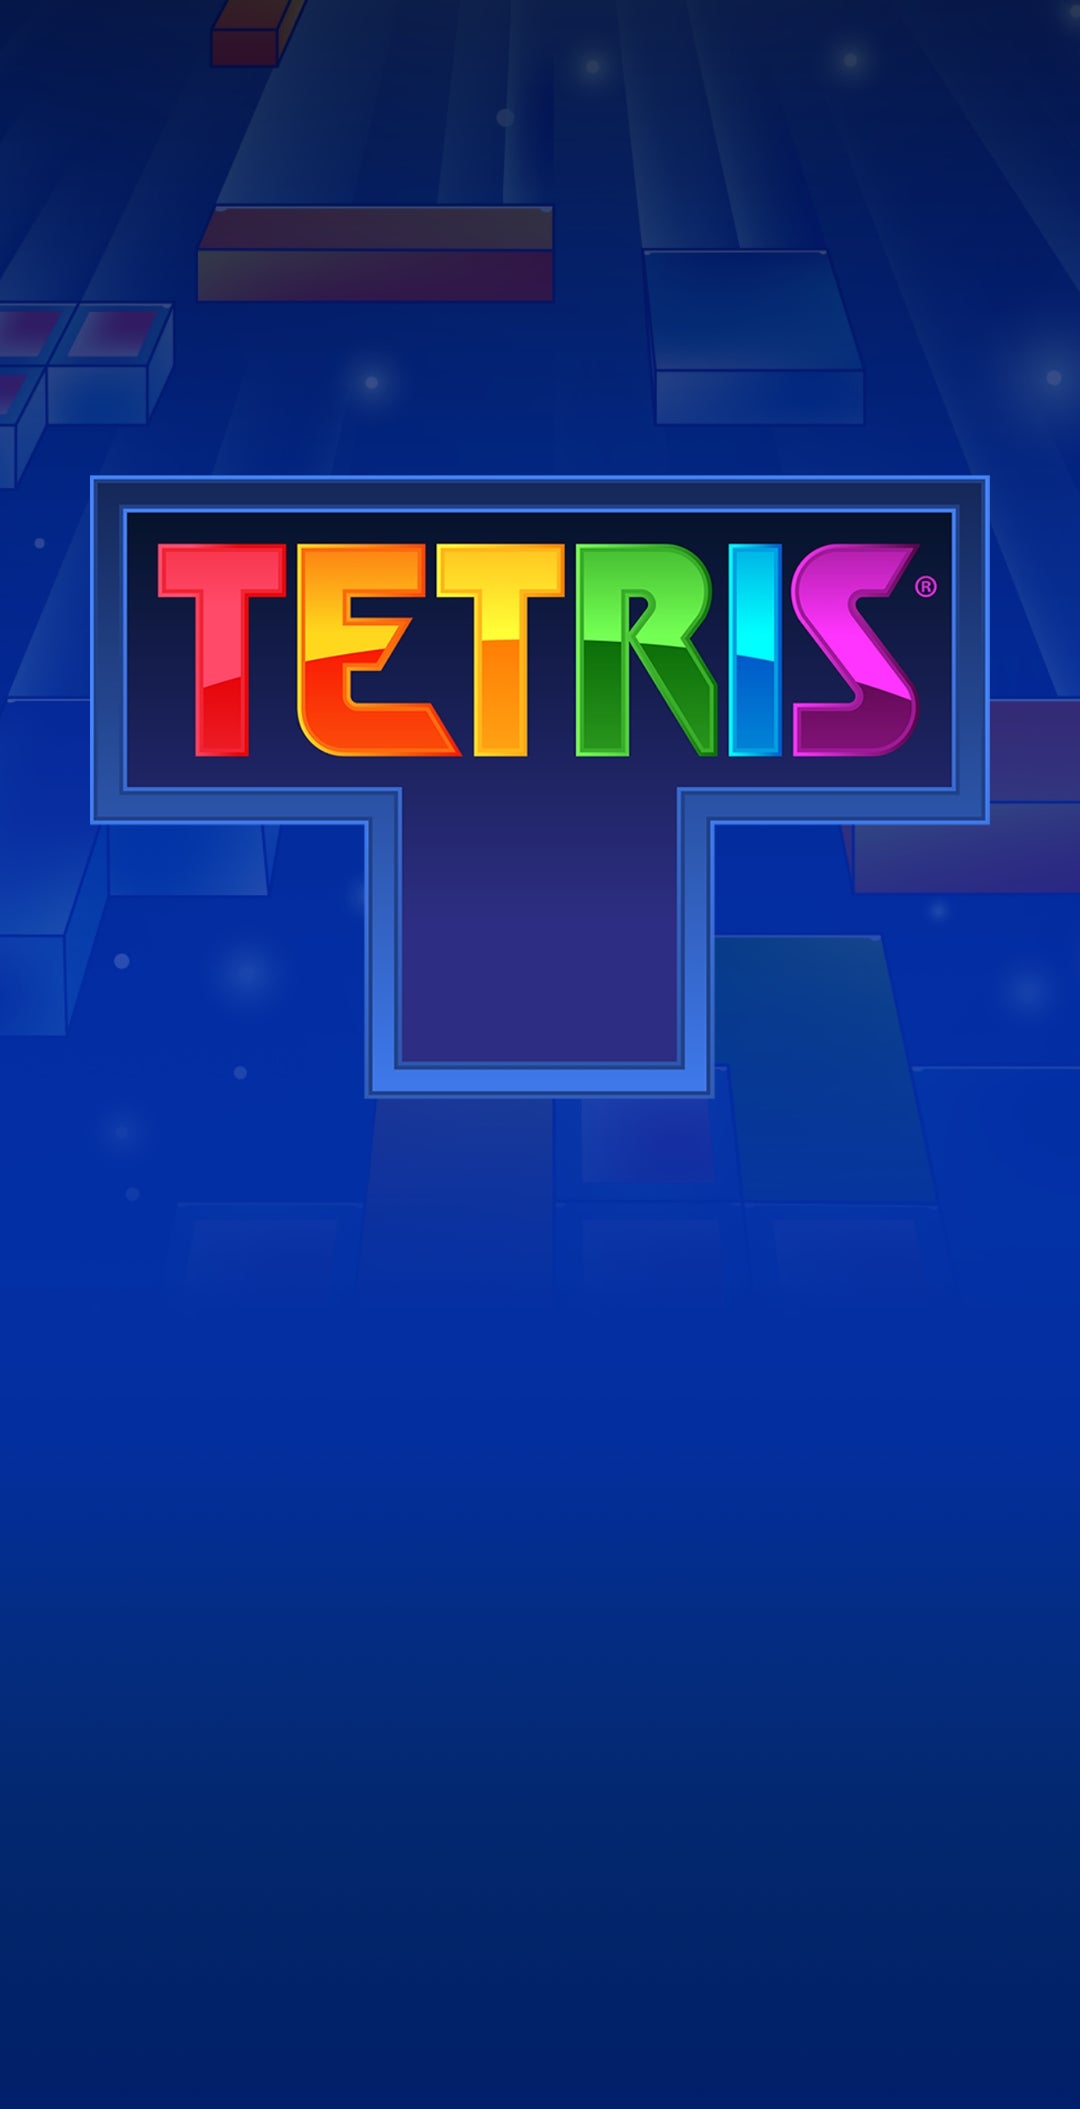 Tetris 16bit